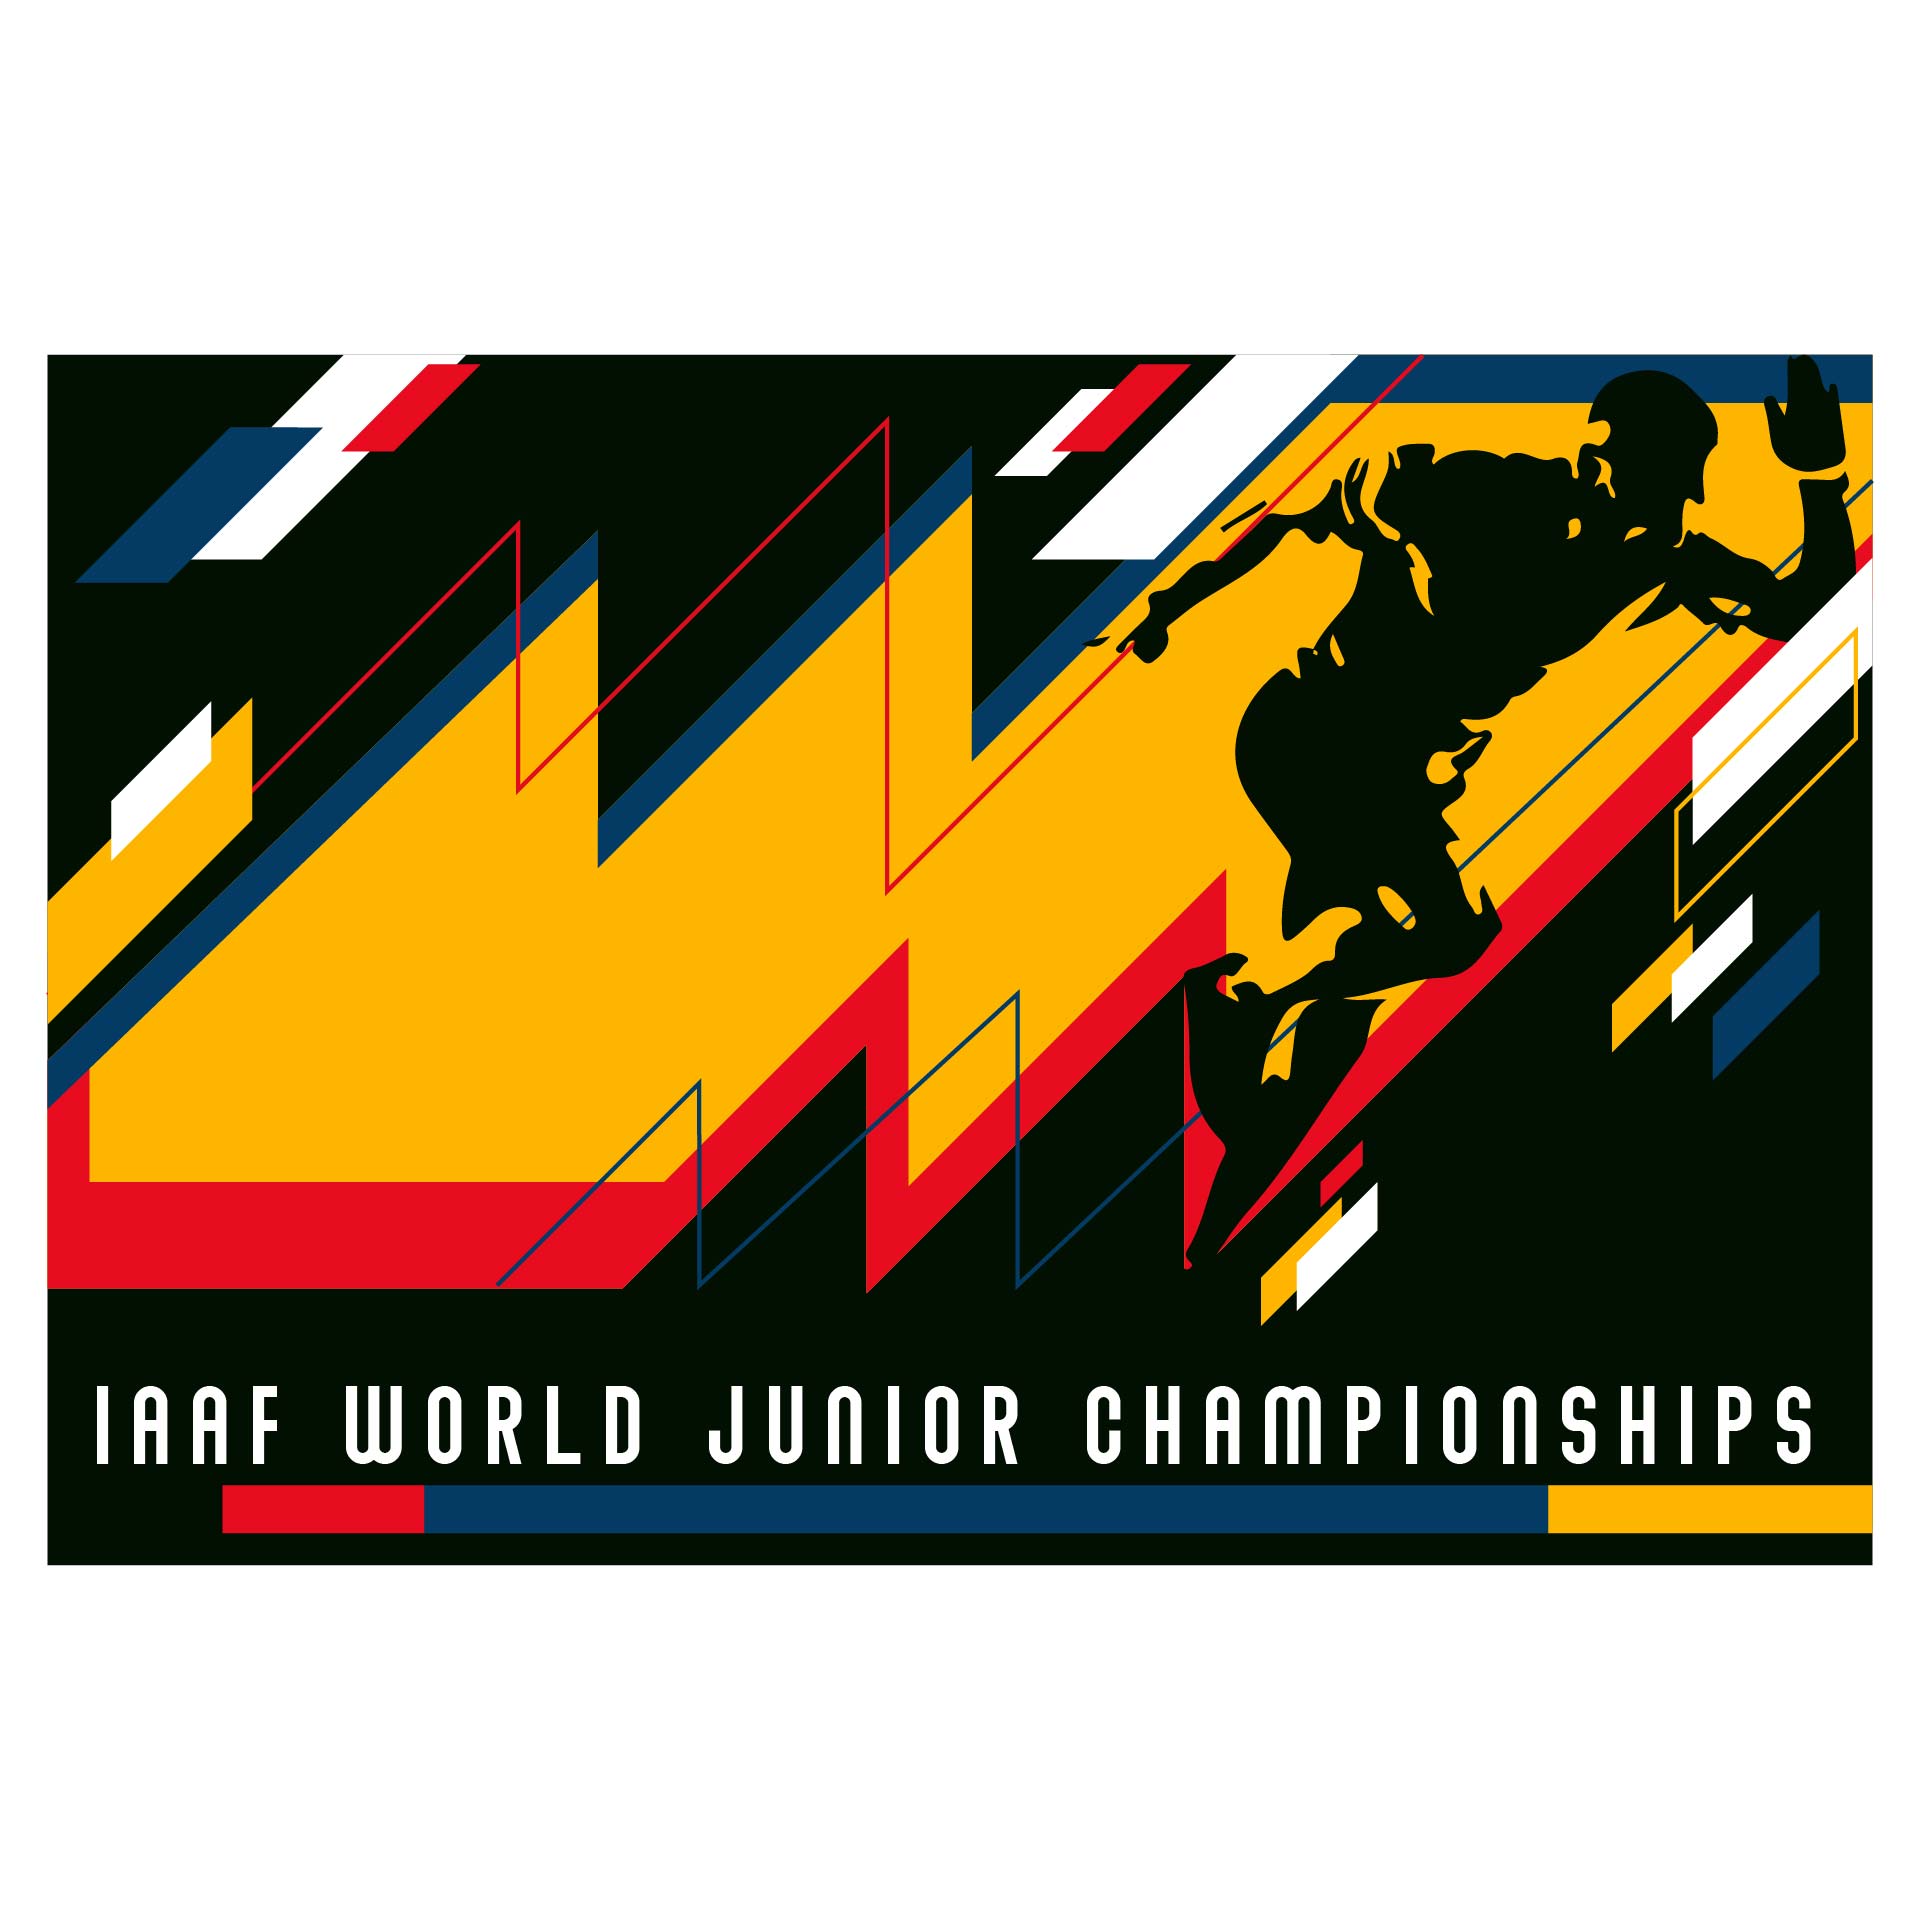 IAAF World Junior Championship National